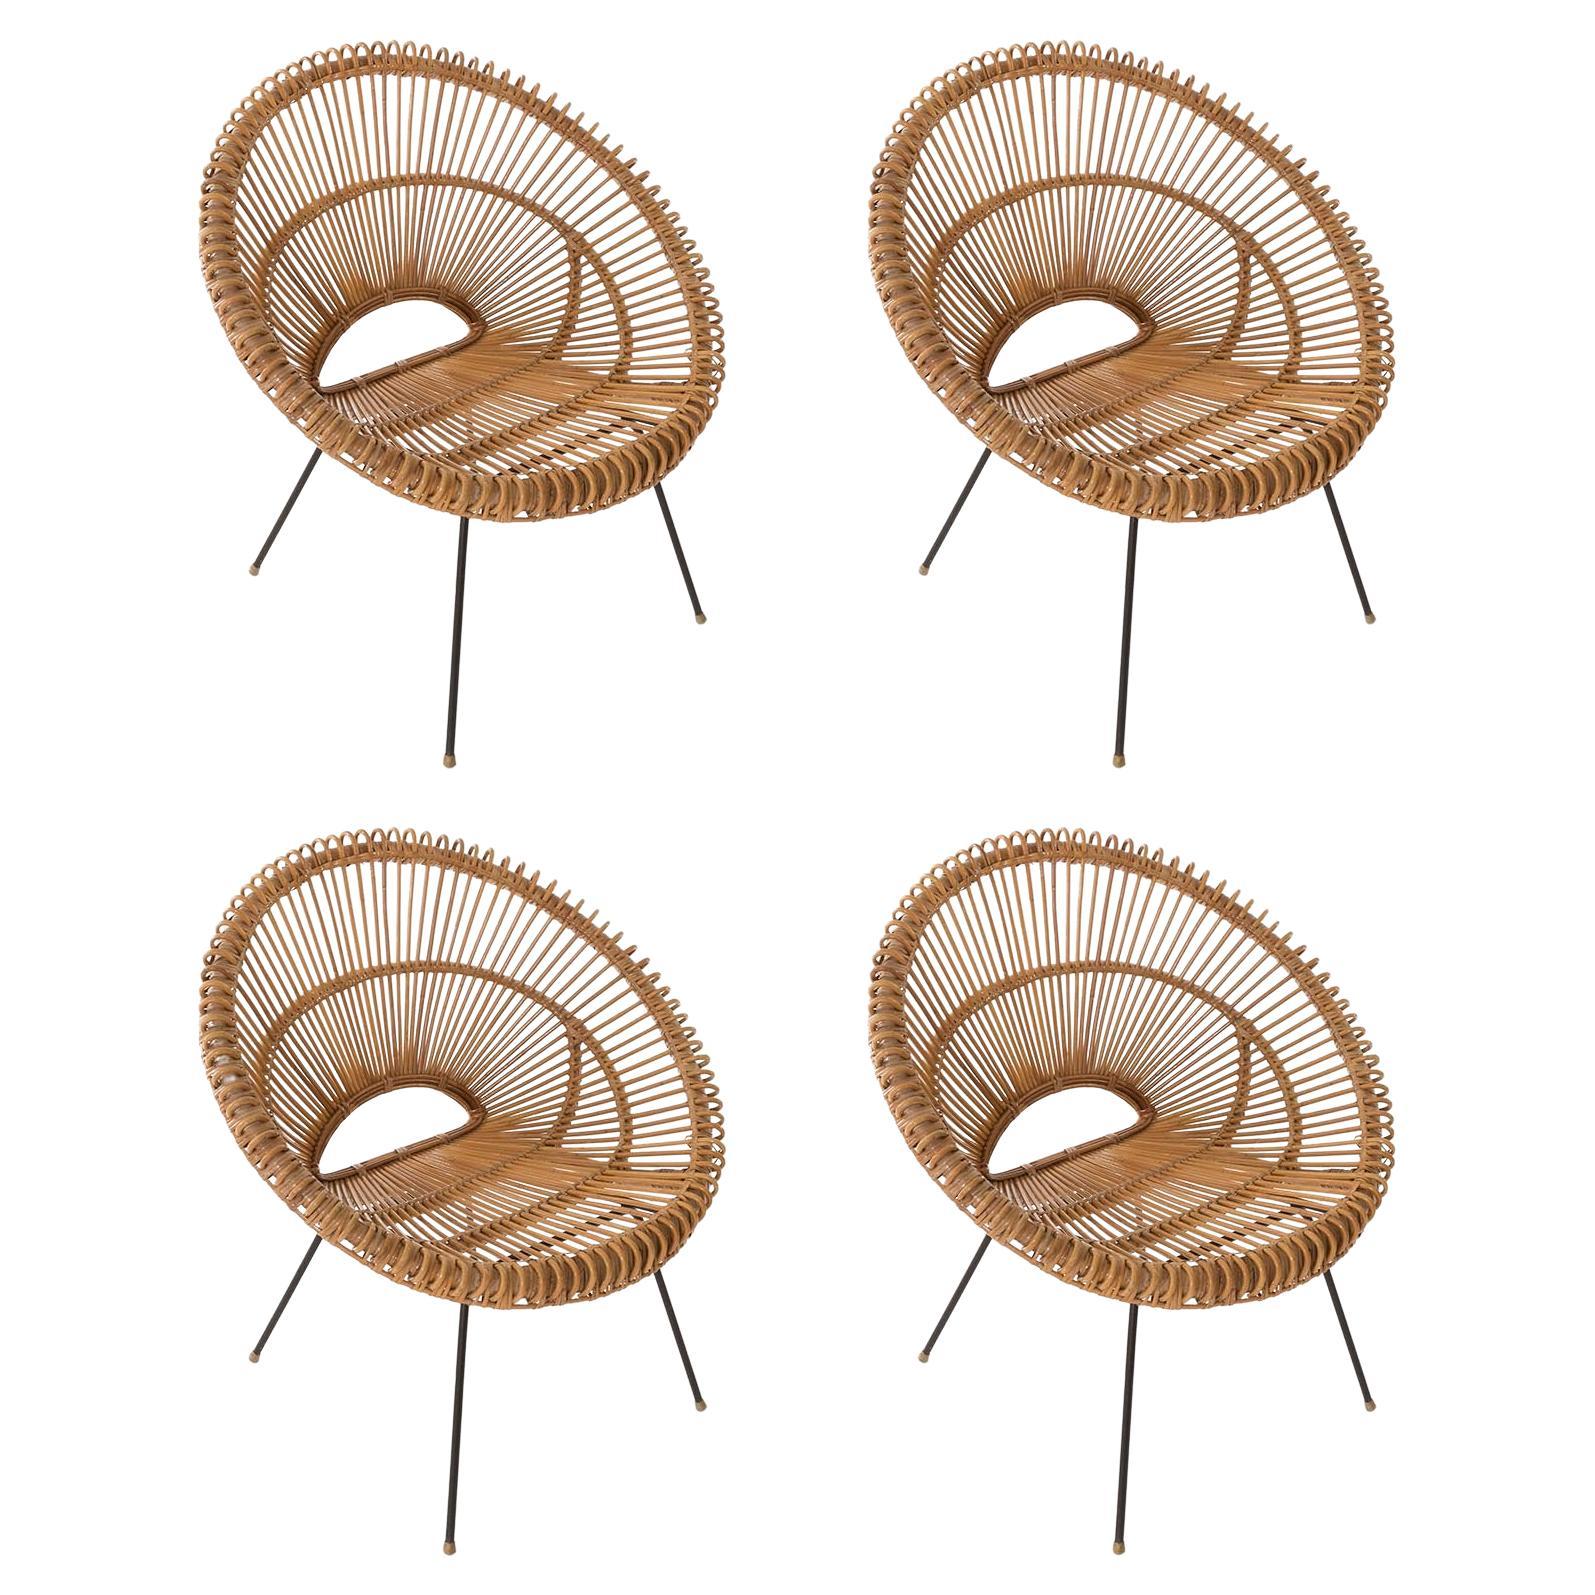 Set Four Mid-Century Modern Rattan Bamboo Chairs, Janine Abraham, Dirk Rol, 1960